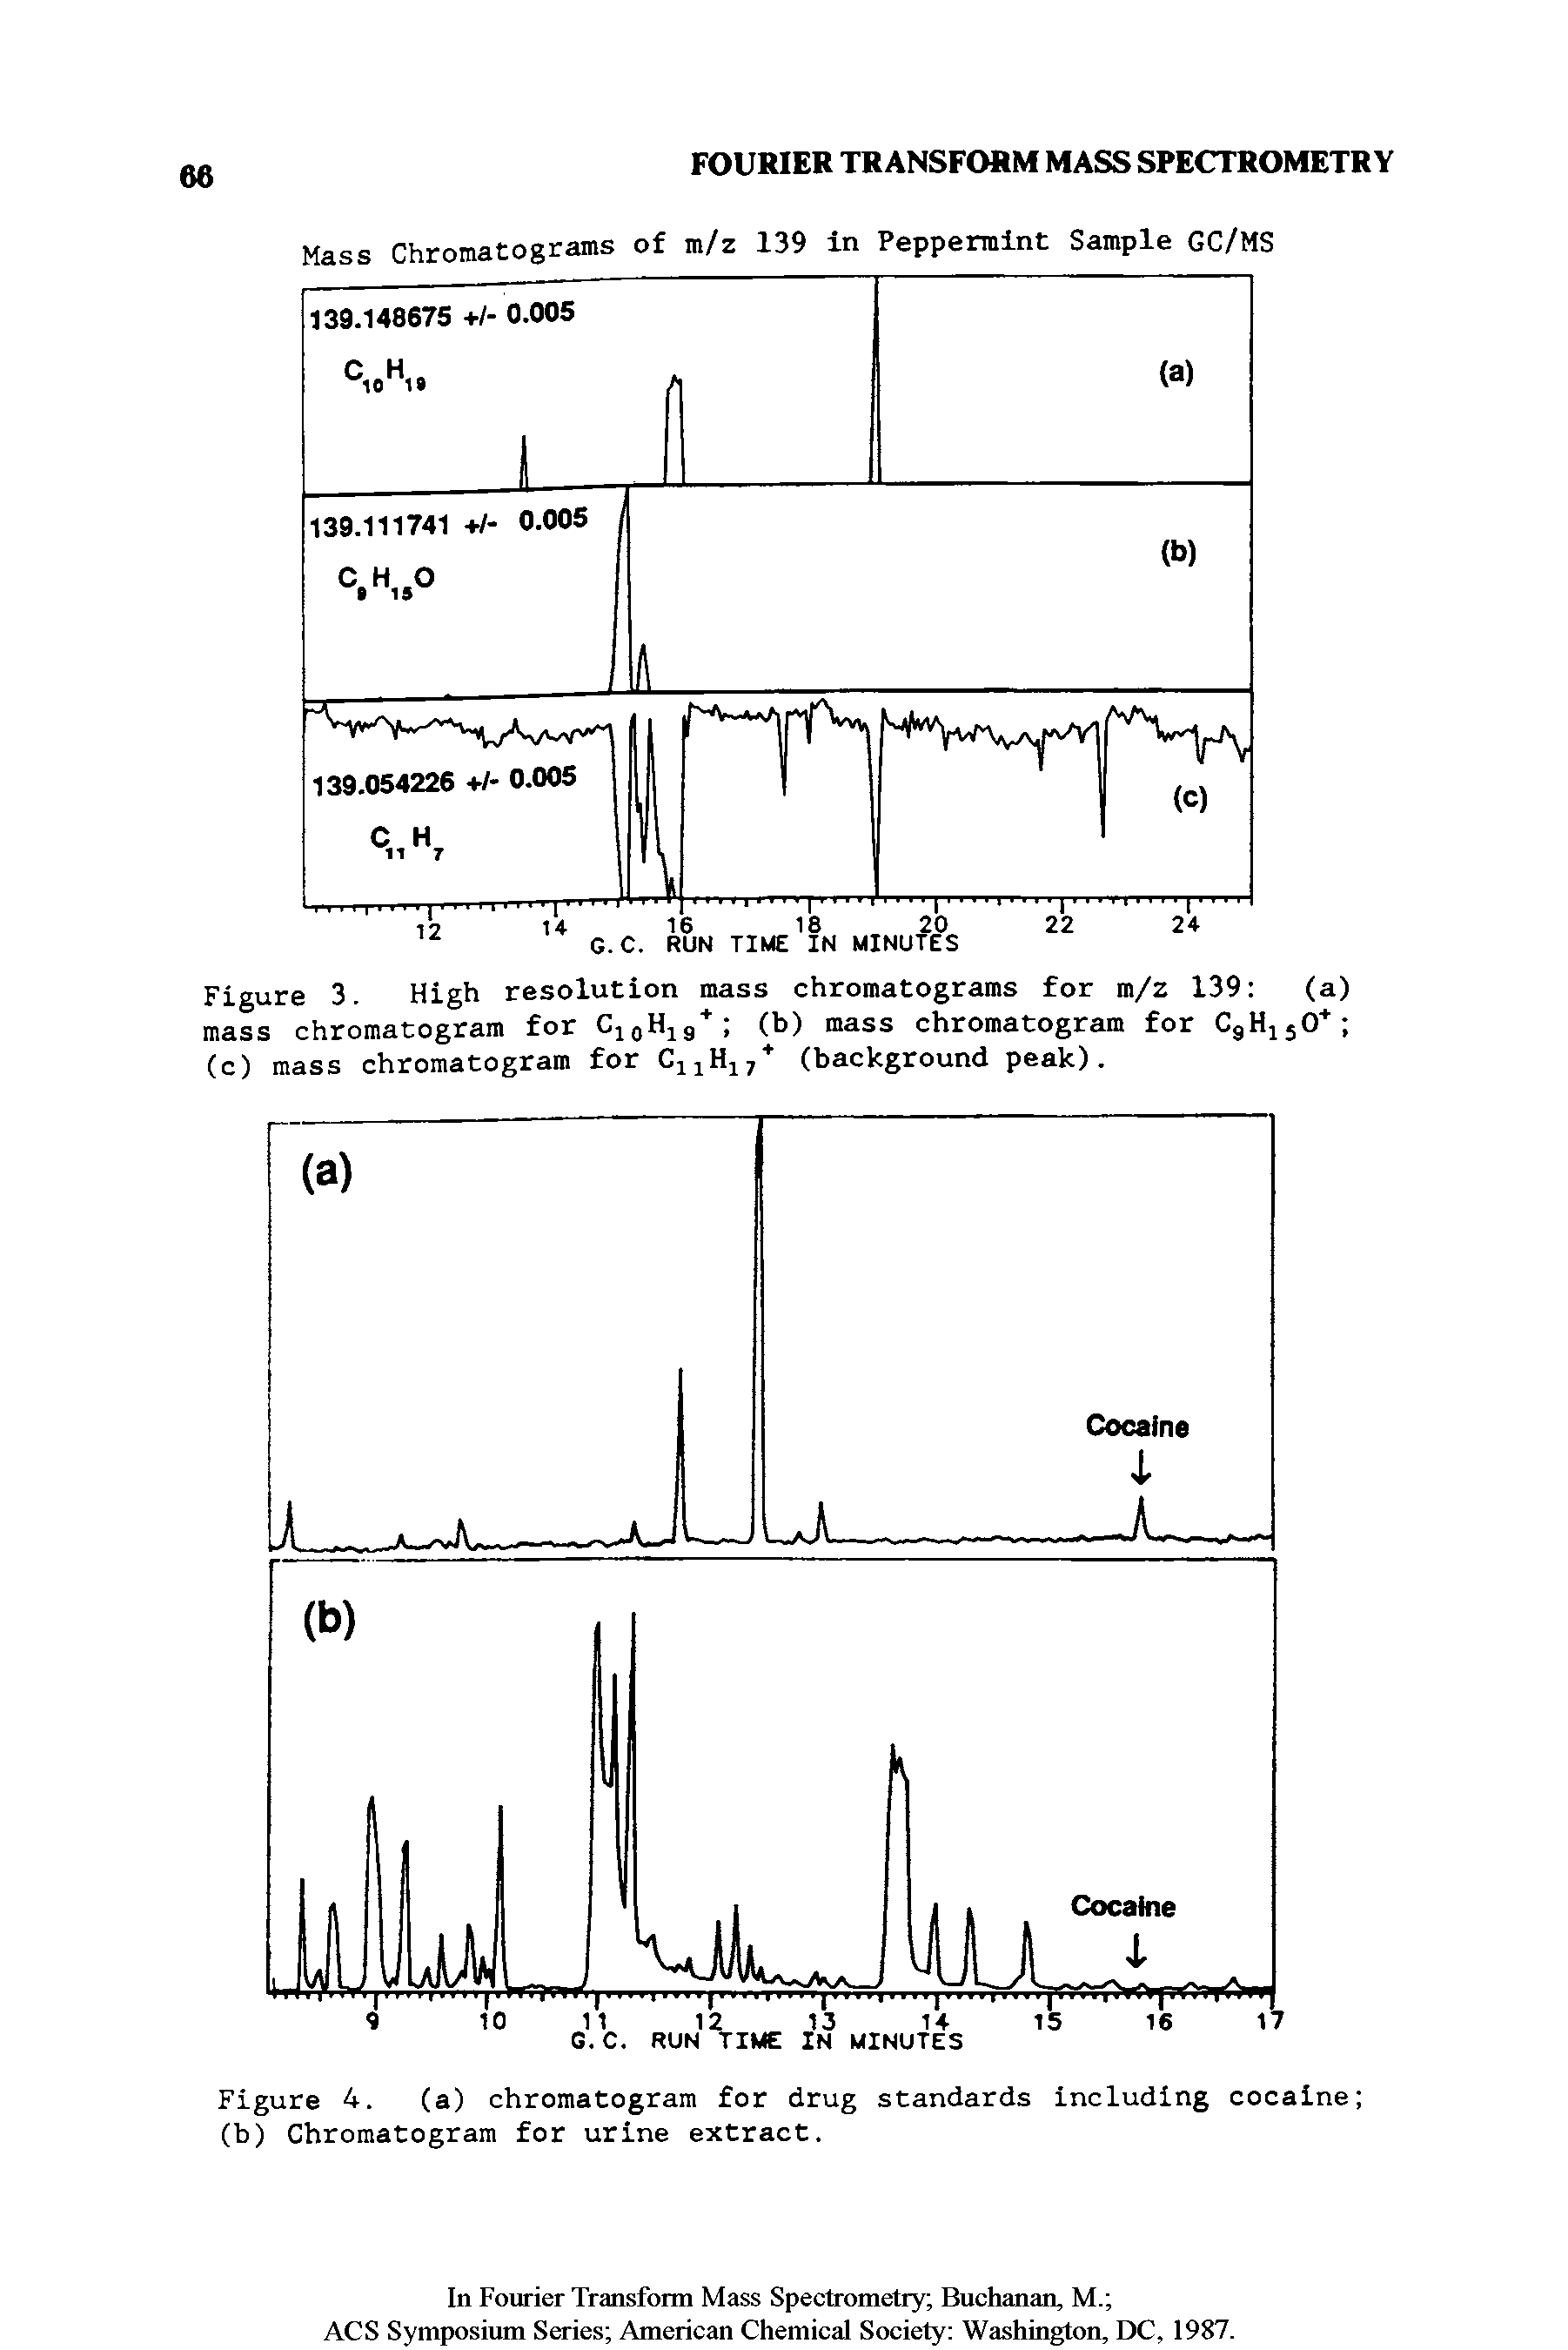 Figure 3. High resolution mass chromatograms for m/z 139 (a) mass chromatogram for C10H19+ (b) mass chromatogram for C9H150+ (c) mass chromatogram for C11H17+ (background peak).